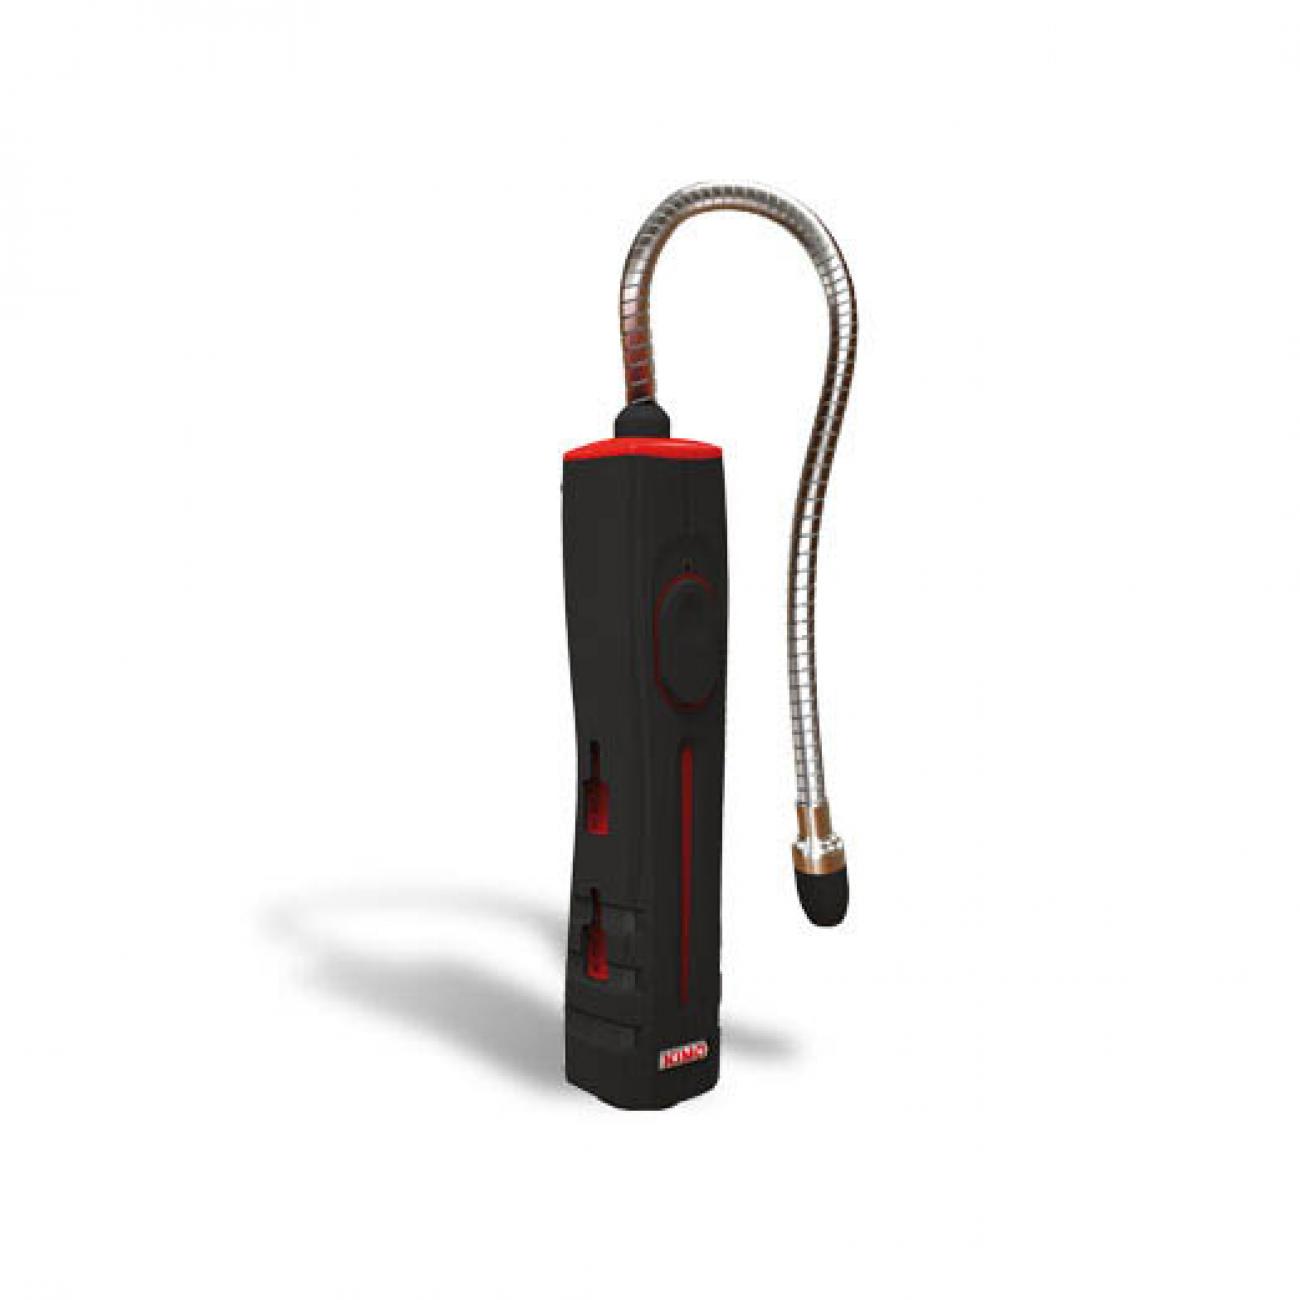 Gas leak probe For class 210 / 310 multi-function portables